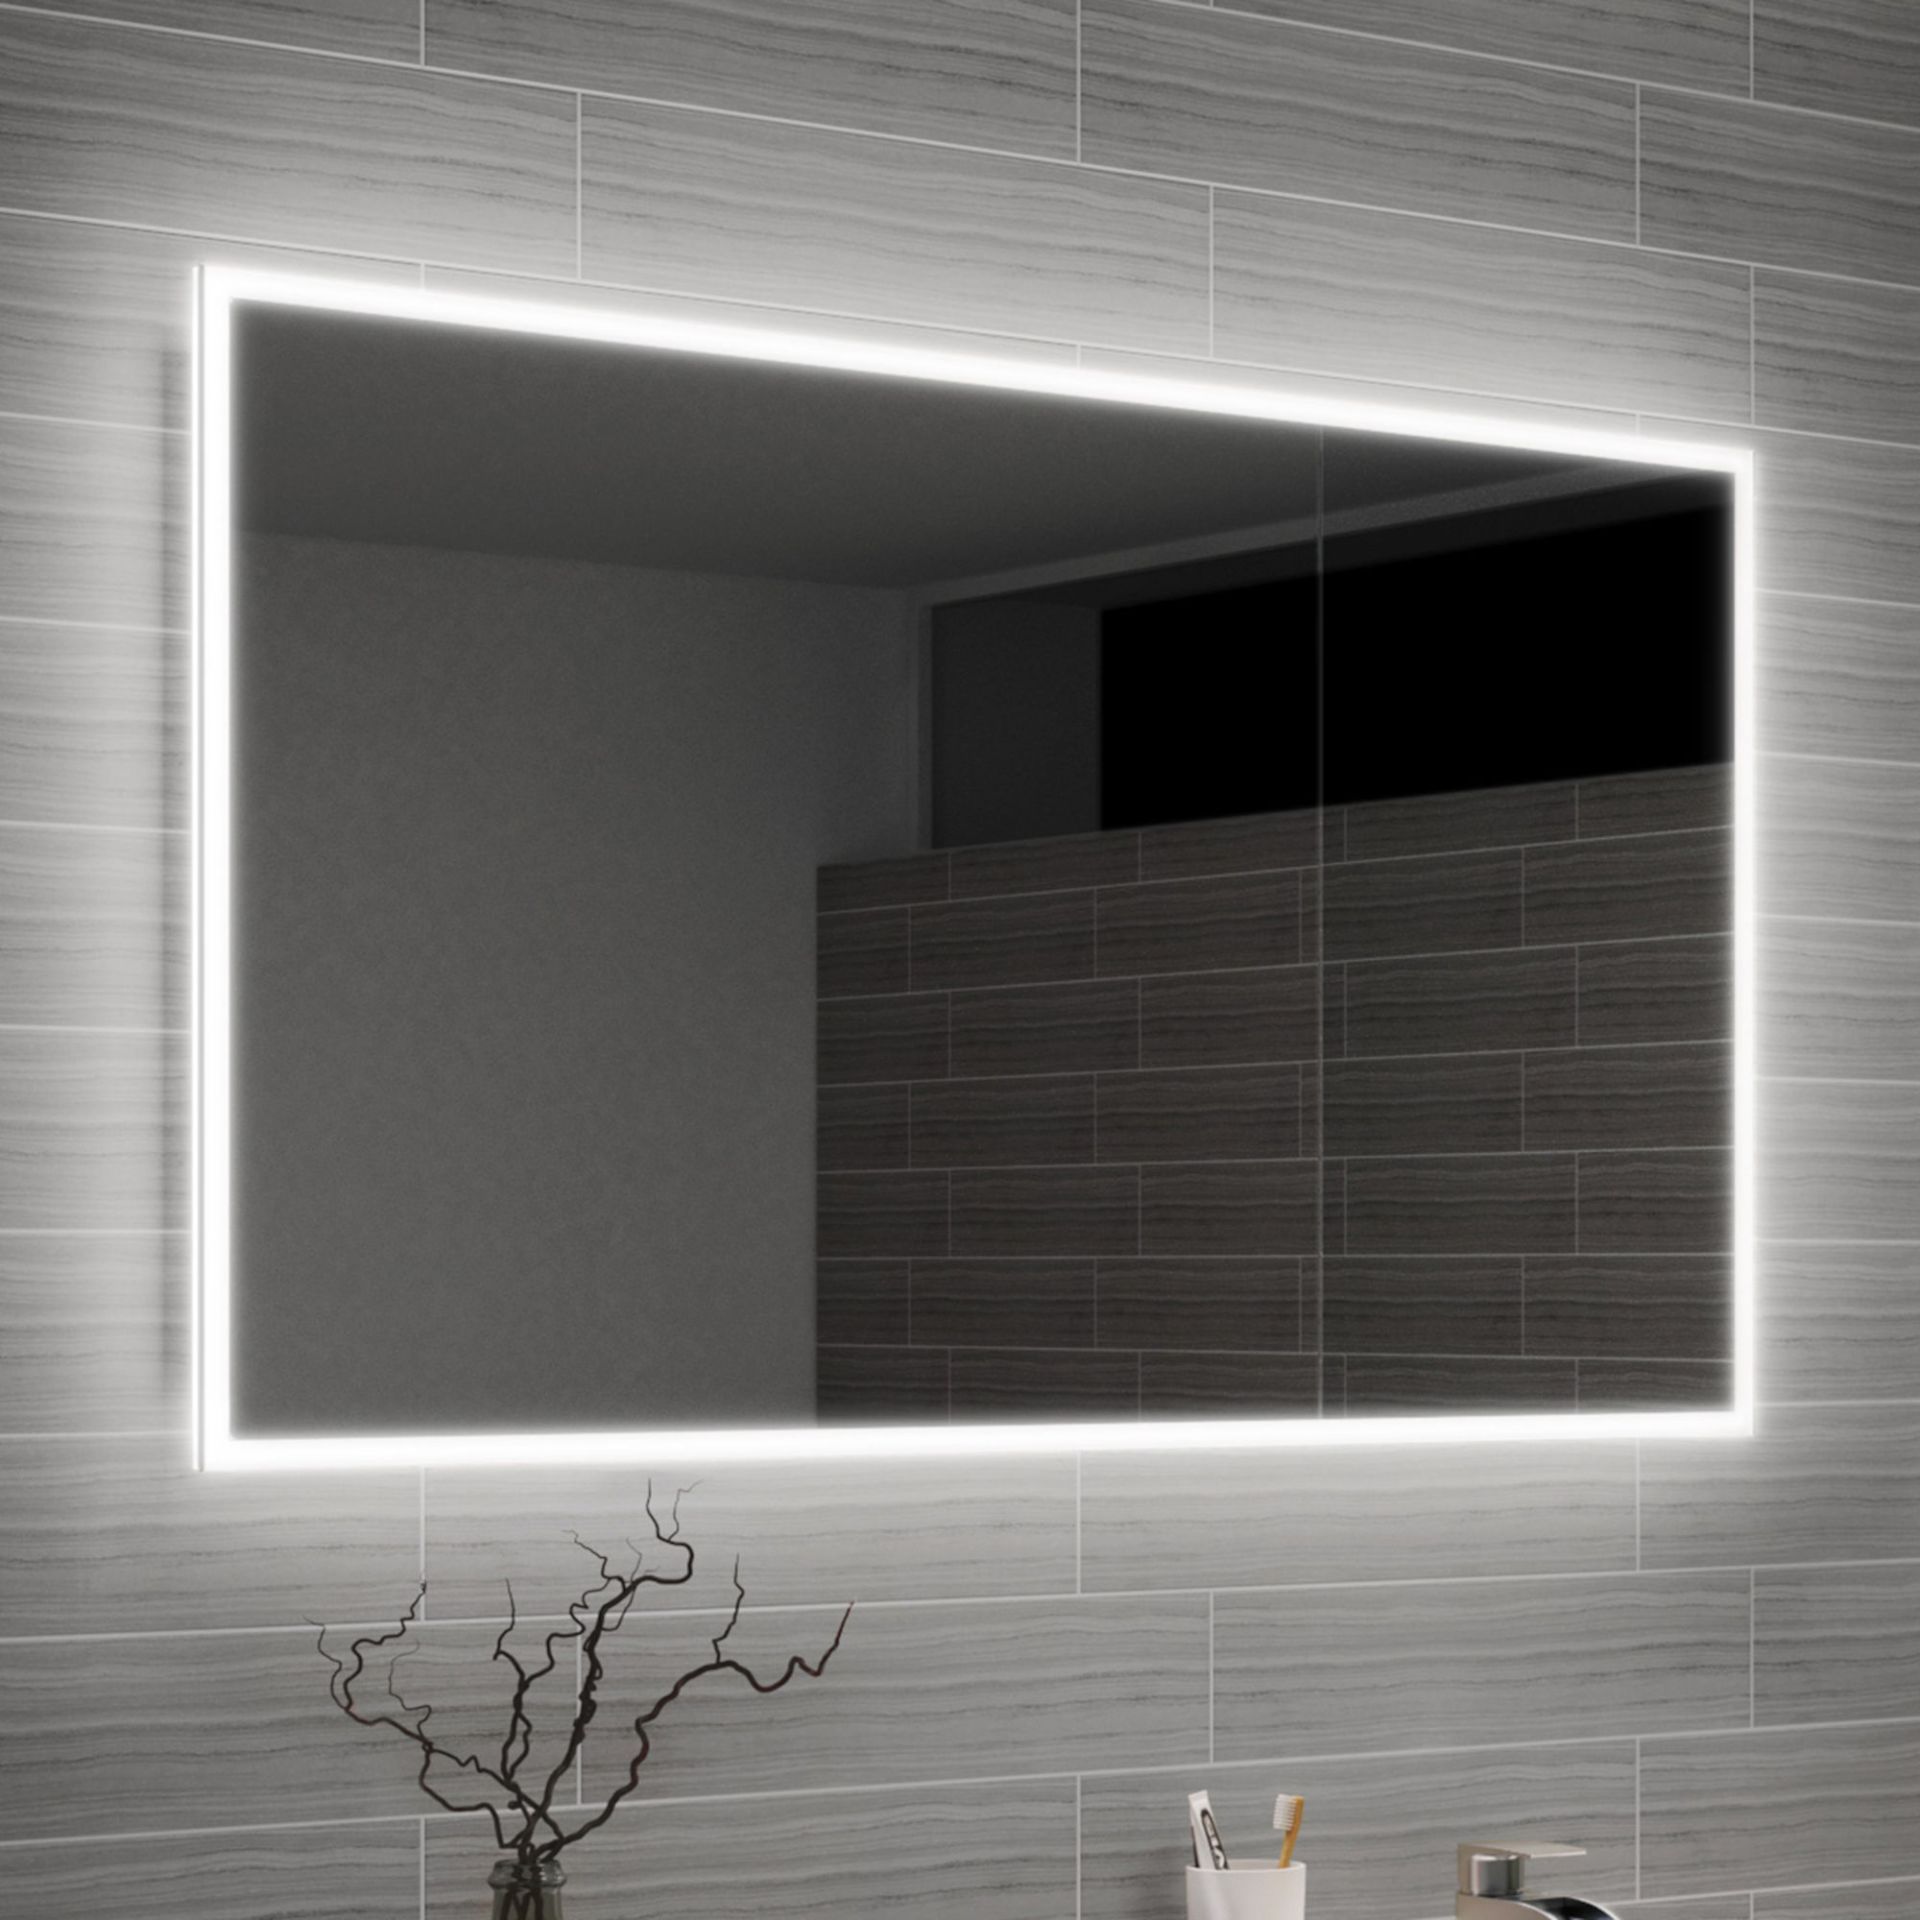 New 600x1000 Nova Illuminated Led Mirror. Rrp £499.99.Ml7006.We Love This Mirror As It Provid...